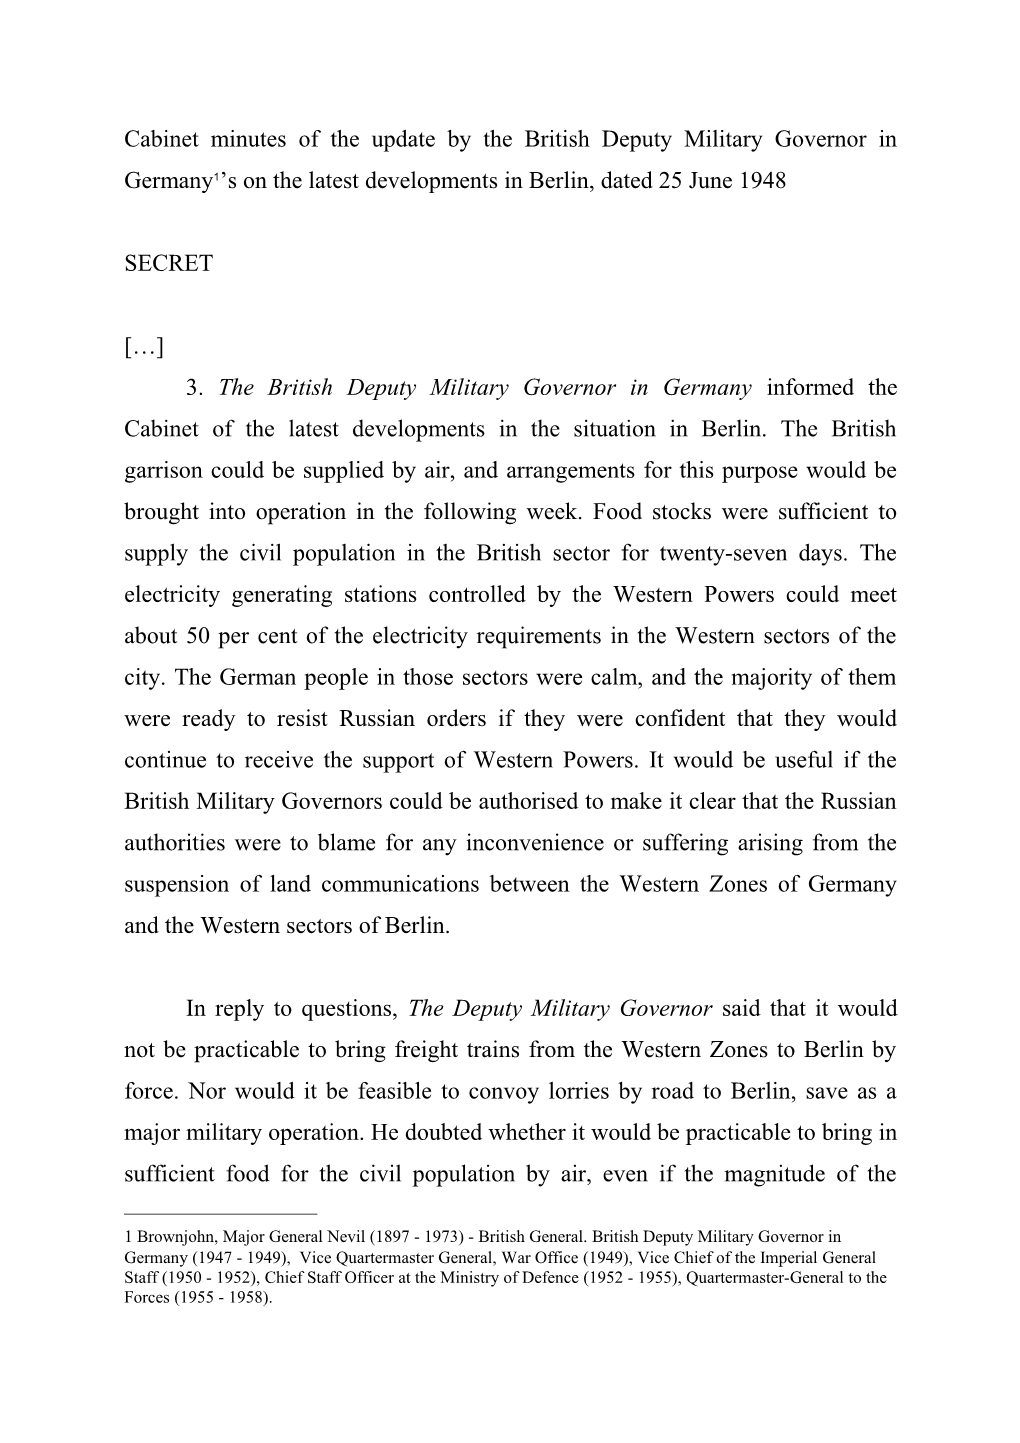 1948-06-25 Cabinet Minutes Berlin Developments